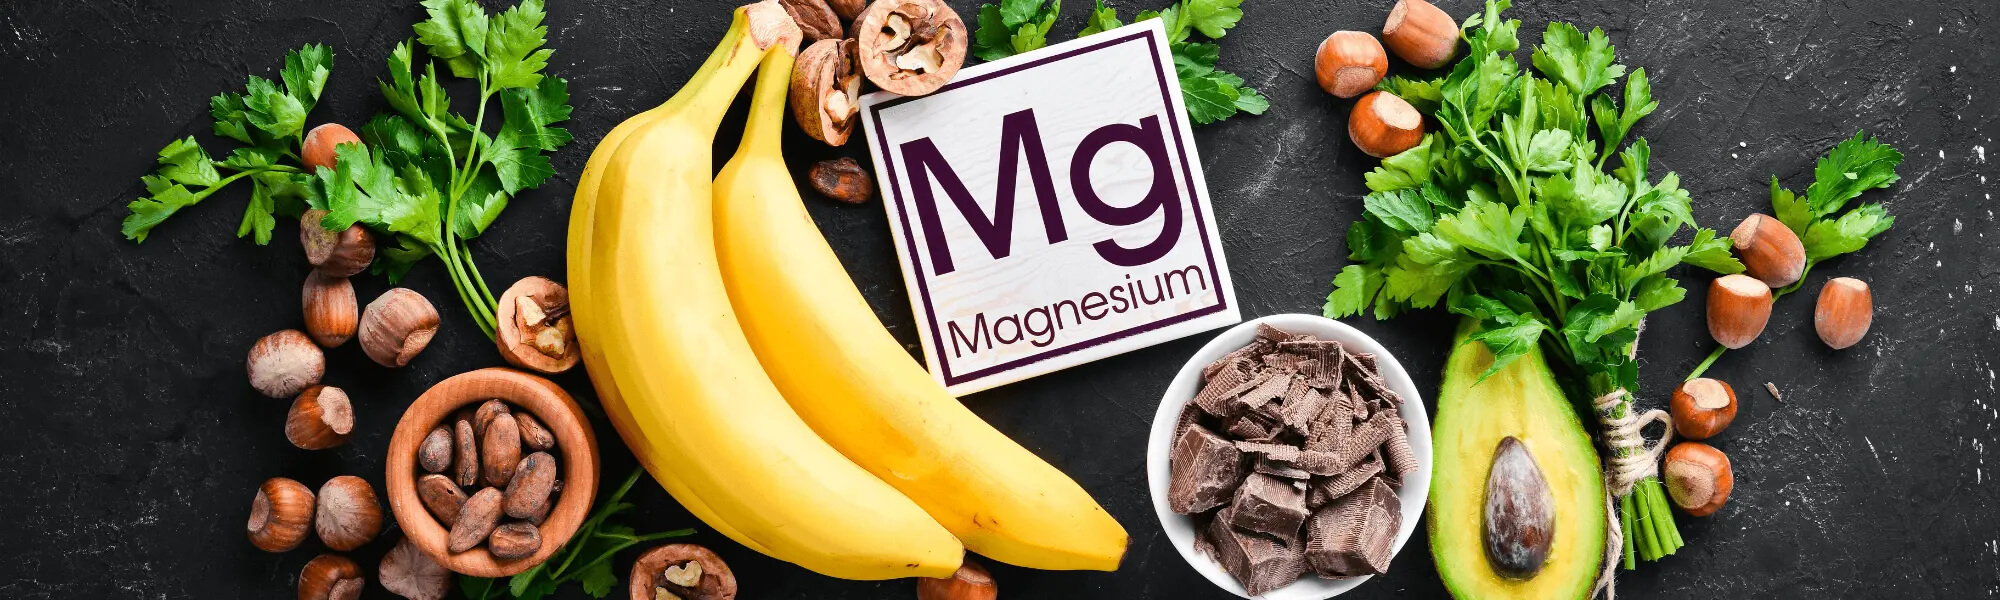 sources of magnesium